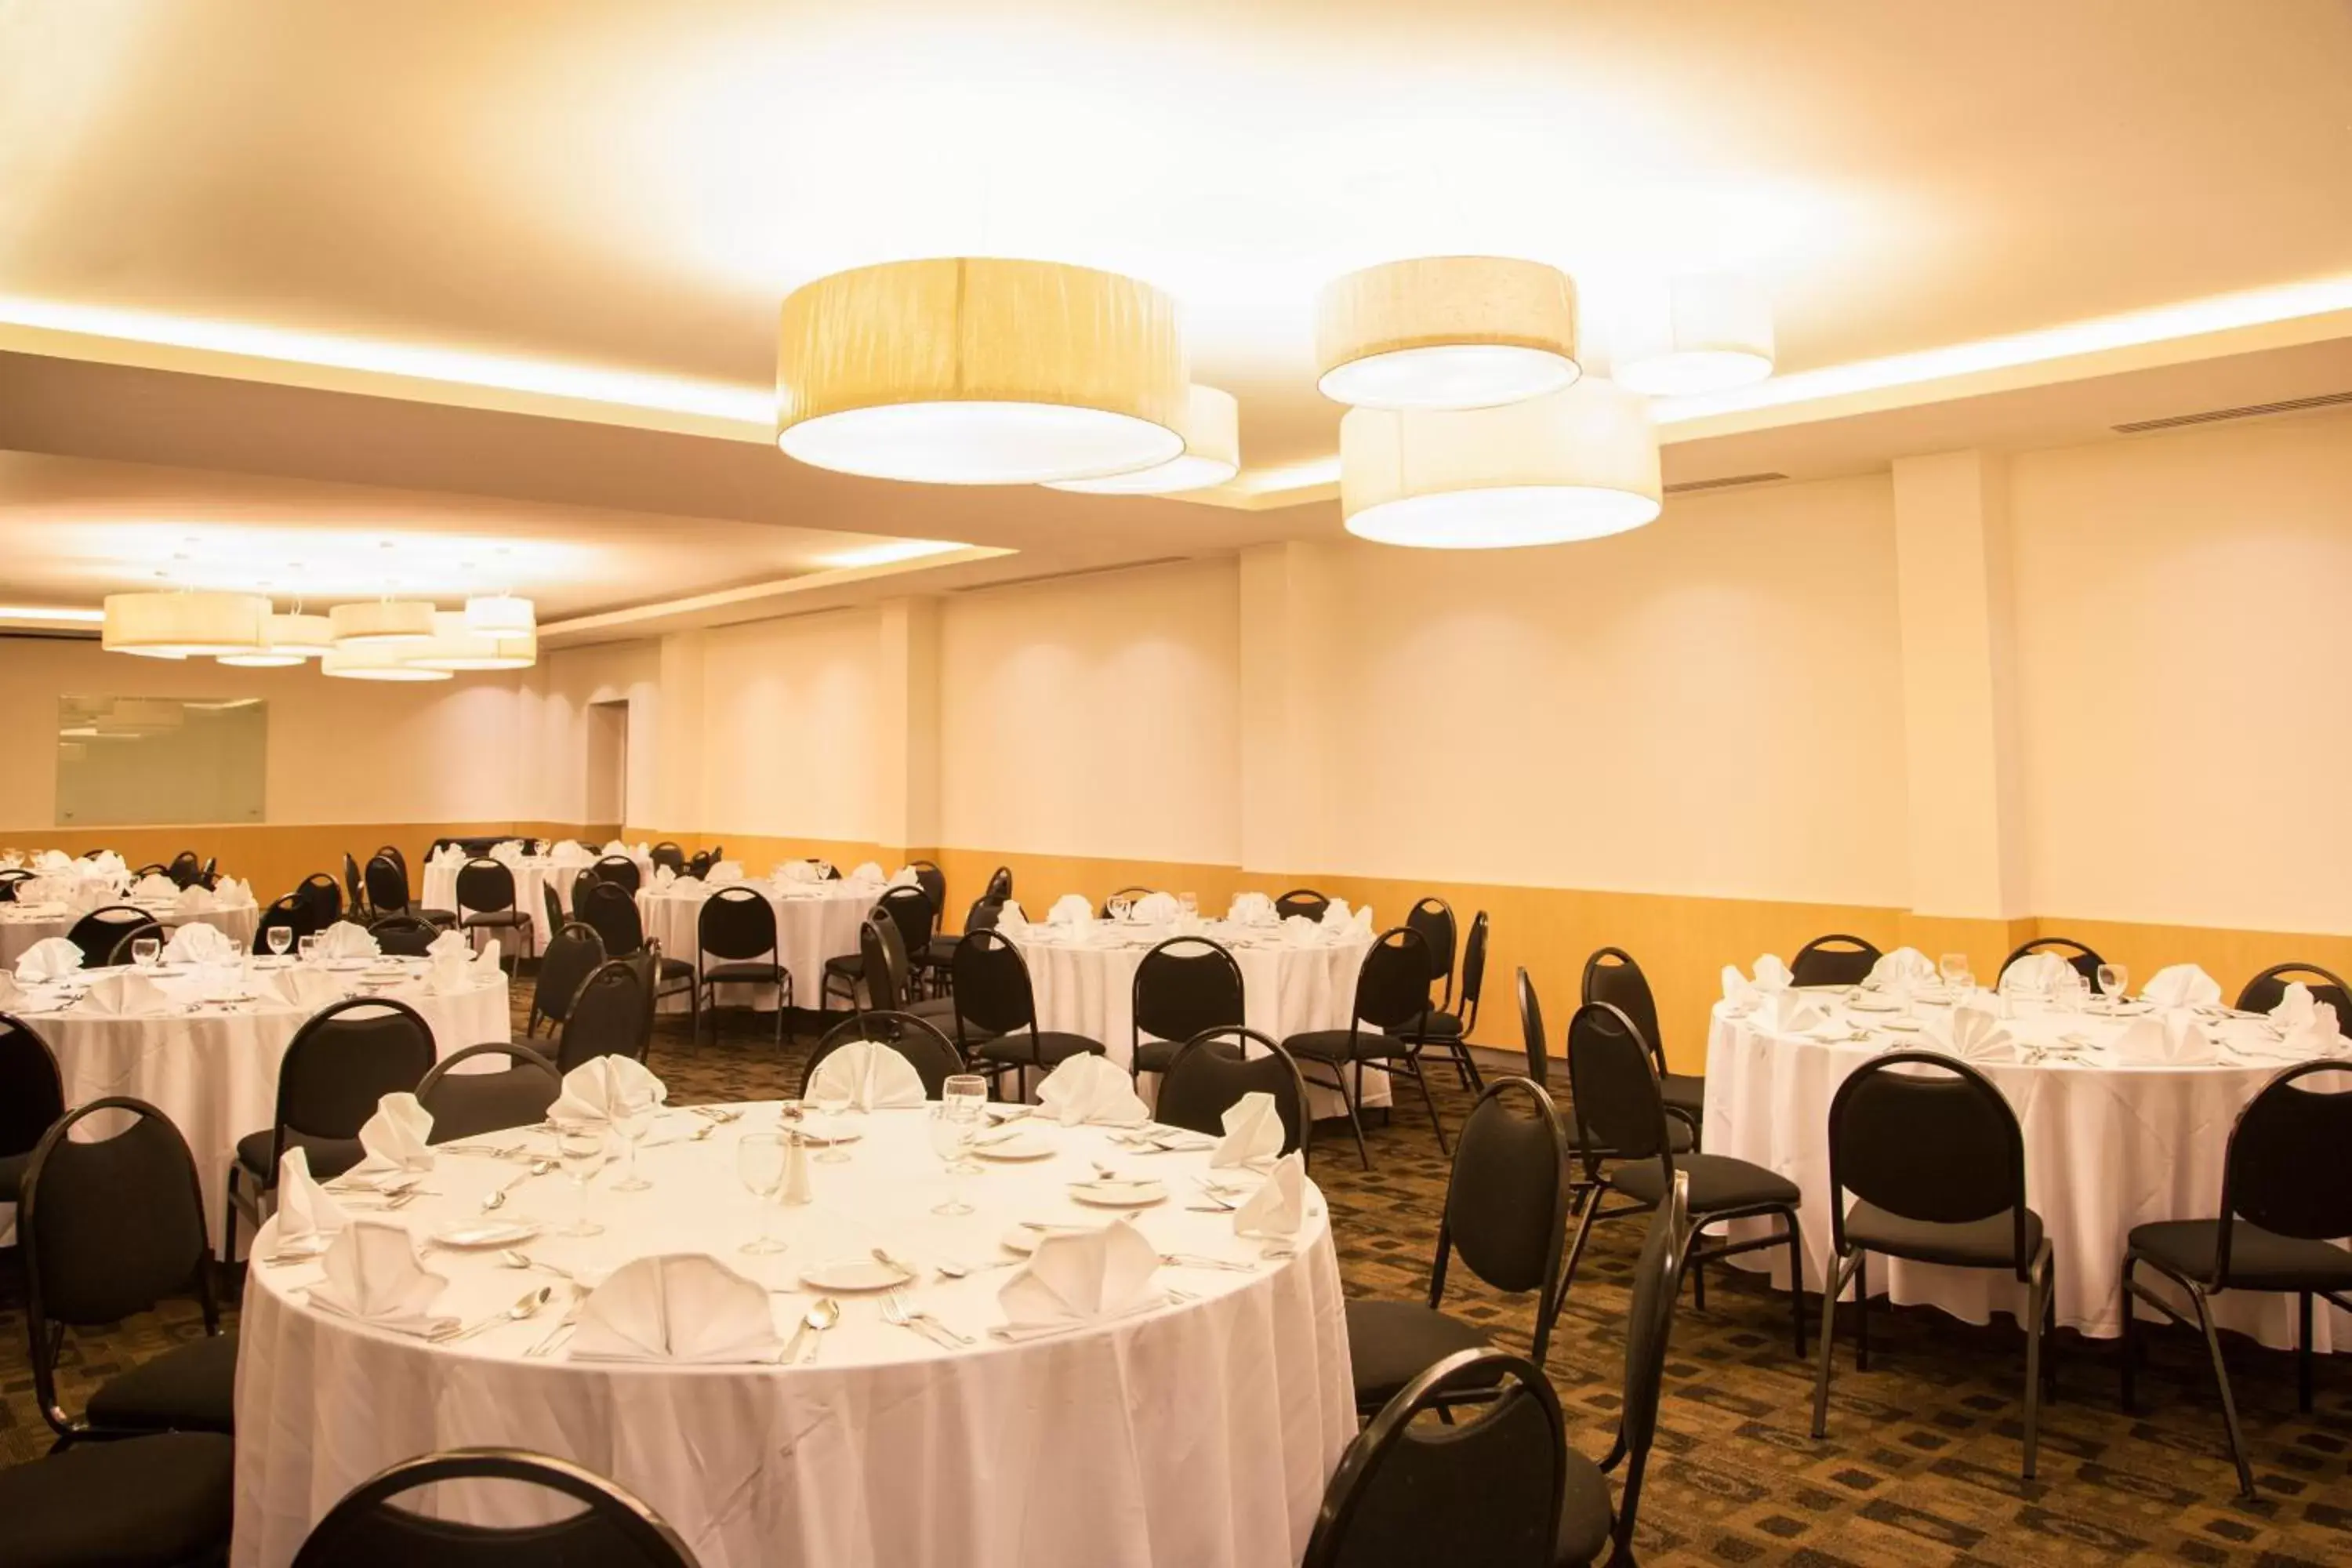 Meeting/conference room, Banquet Facilities in Fiesta Inn Aeropuerto CD Mexico